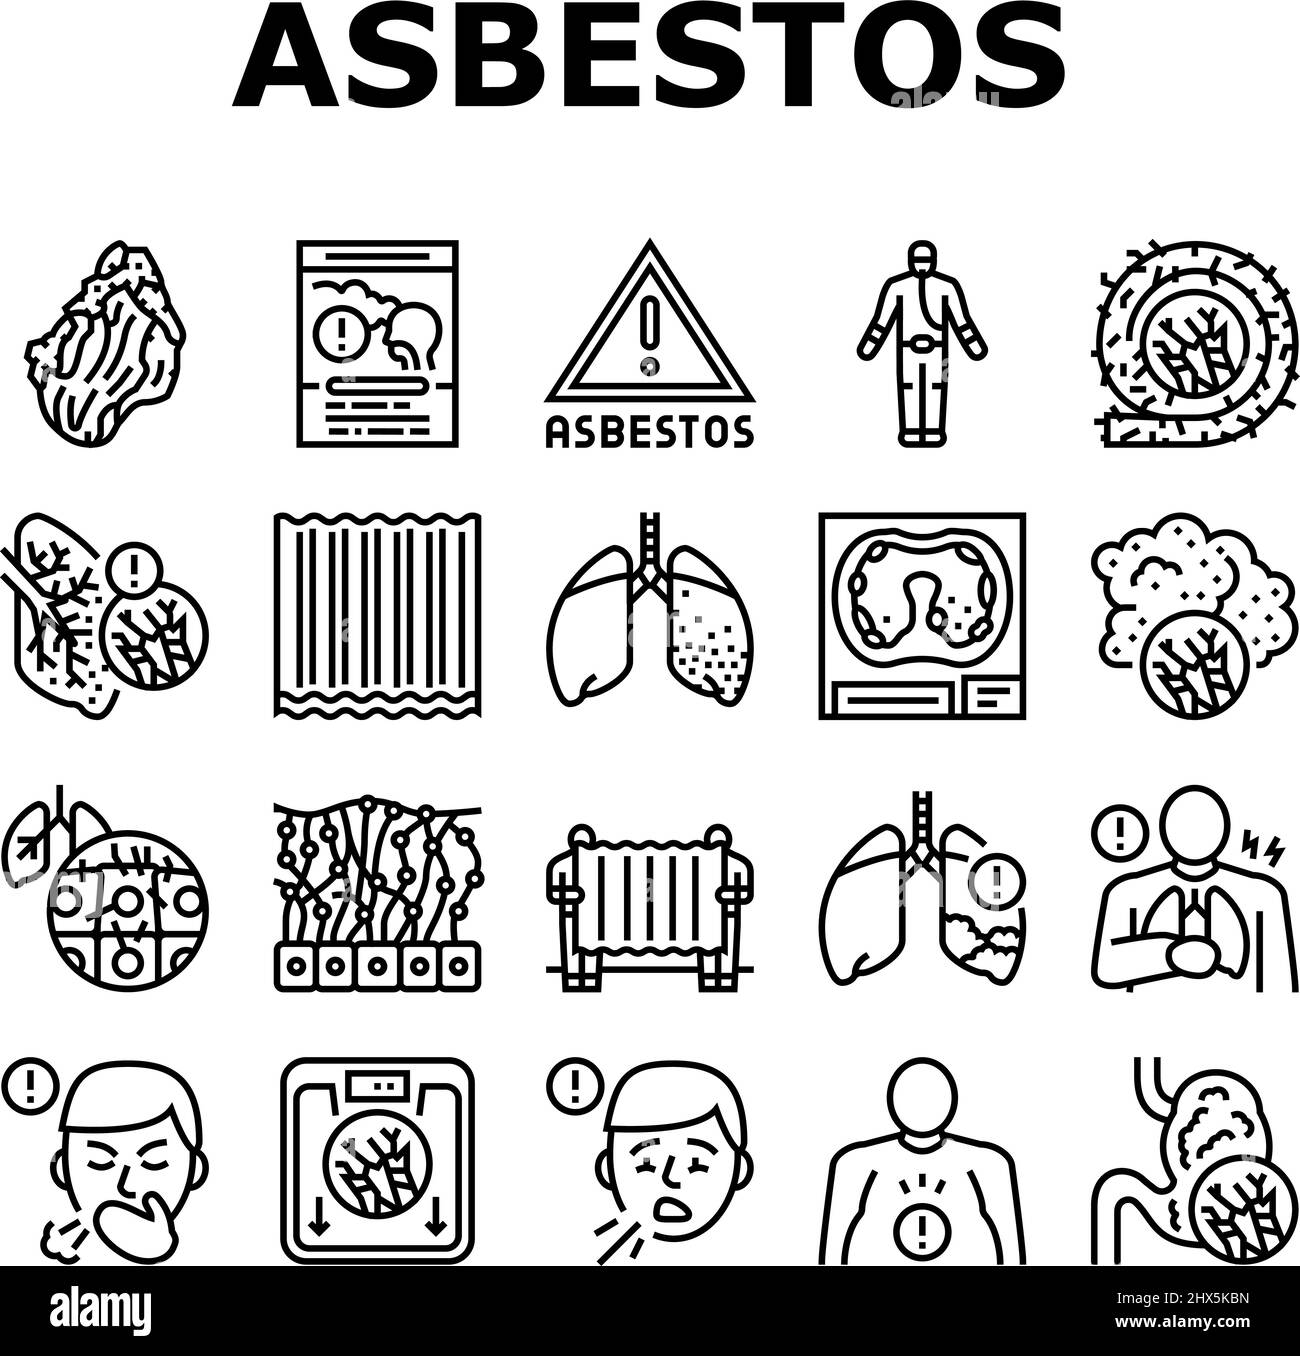 Asbestmaterial Und Problemsymbole Setzen Vektor Stock Vektor